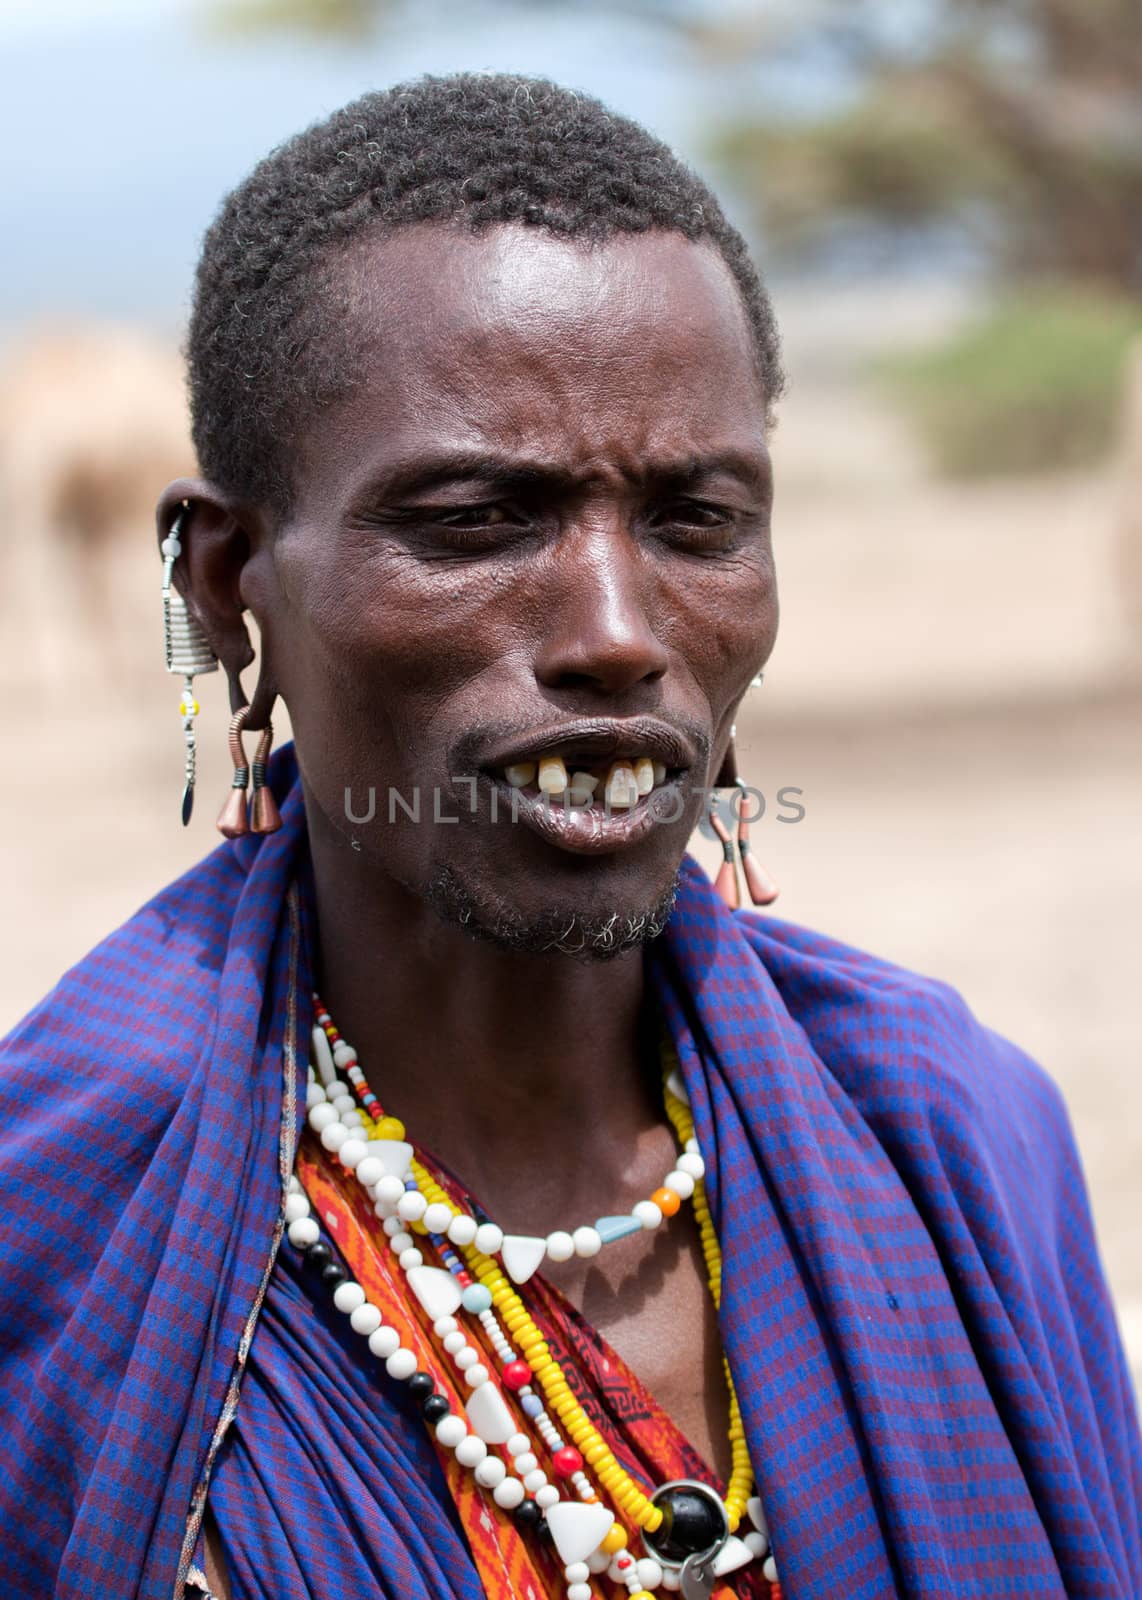 Maasai man portrait in Tanzania, Africa by photocreo